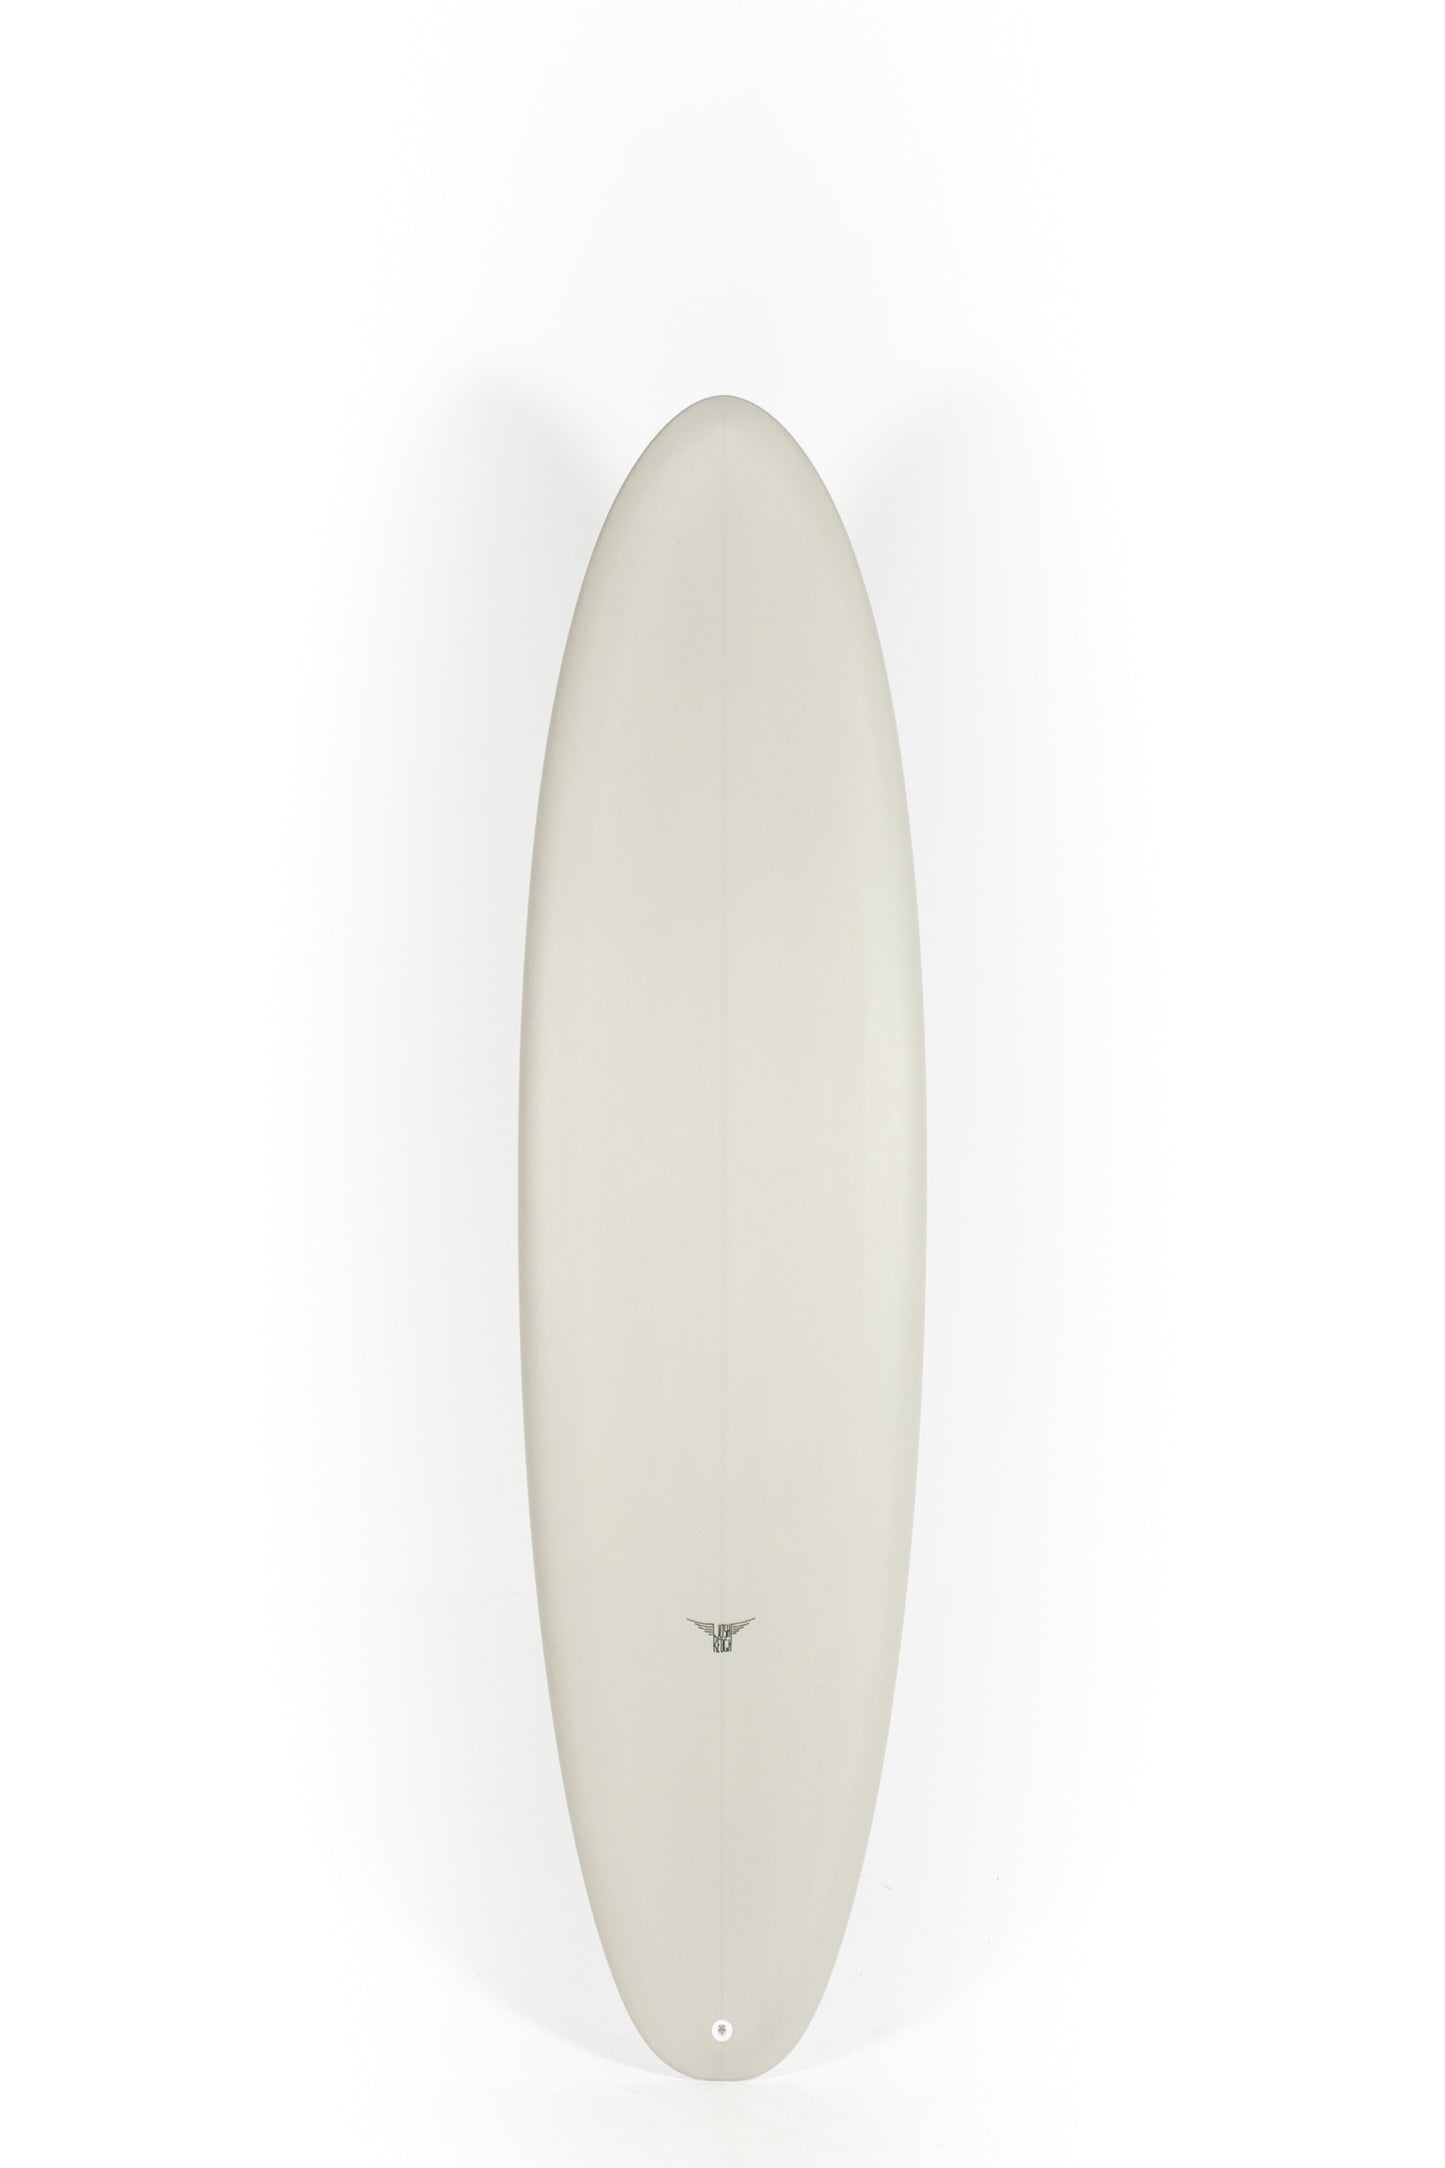 Pukas Surf Shop_Joshua Keogh Surfboard - LIBERATOR SINGLE by Joshua Keogh - 7'4" x 21 3/4 x 2 5/8 - LIBERATOR74